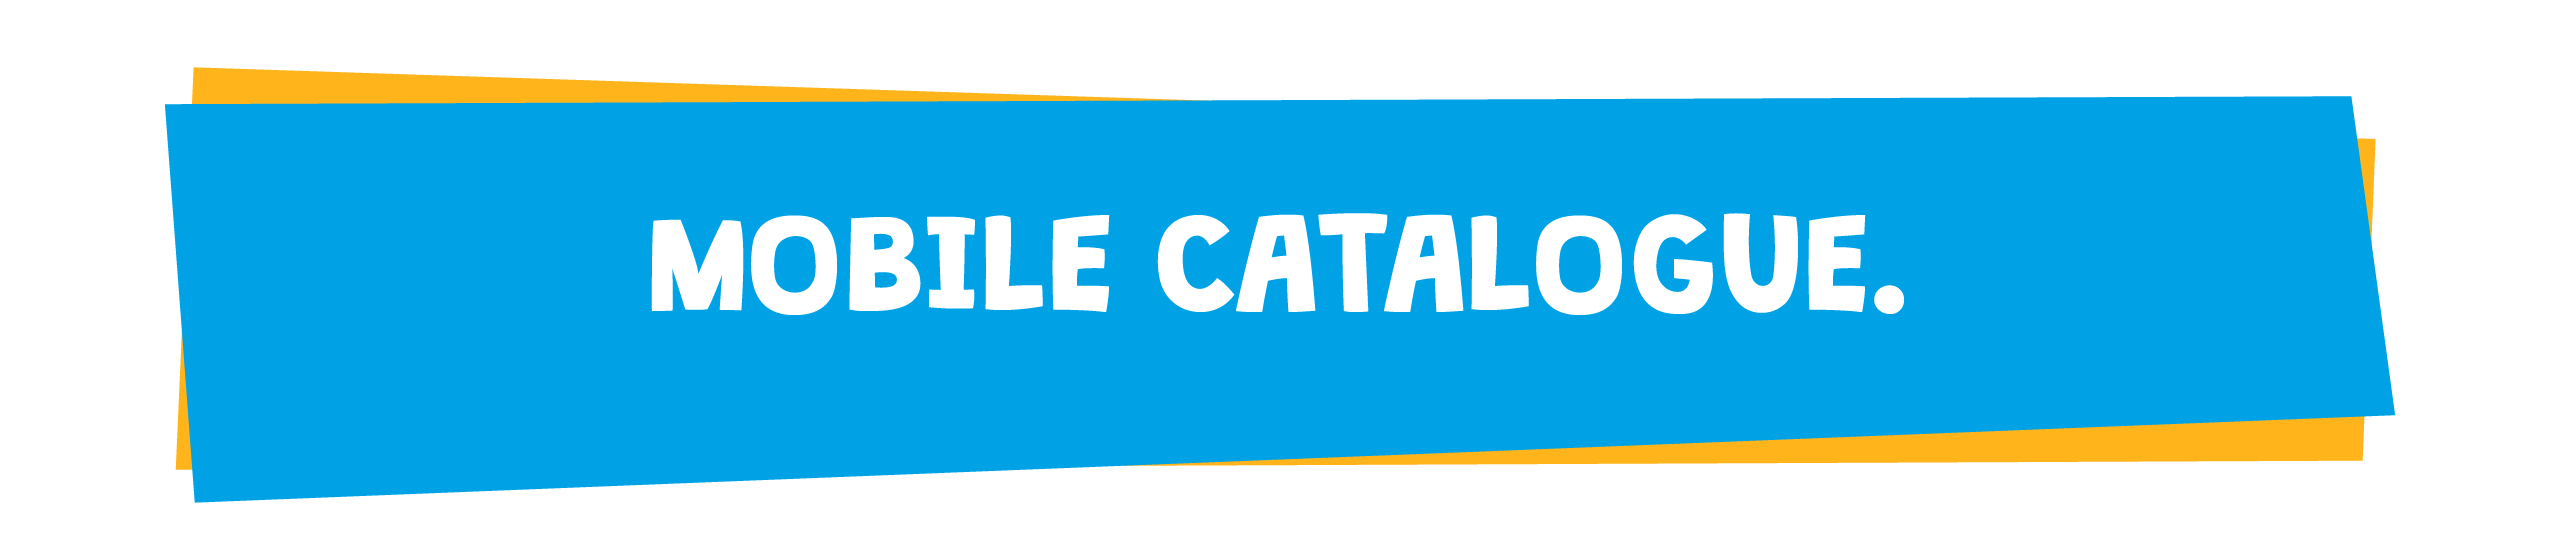 Mobile-catalogue